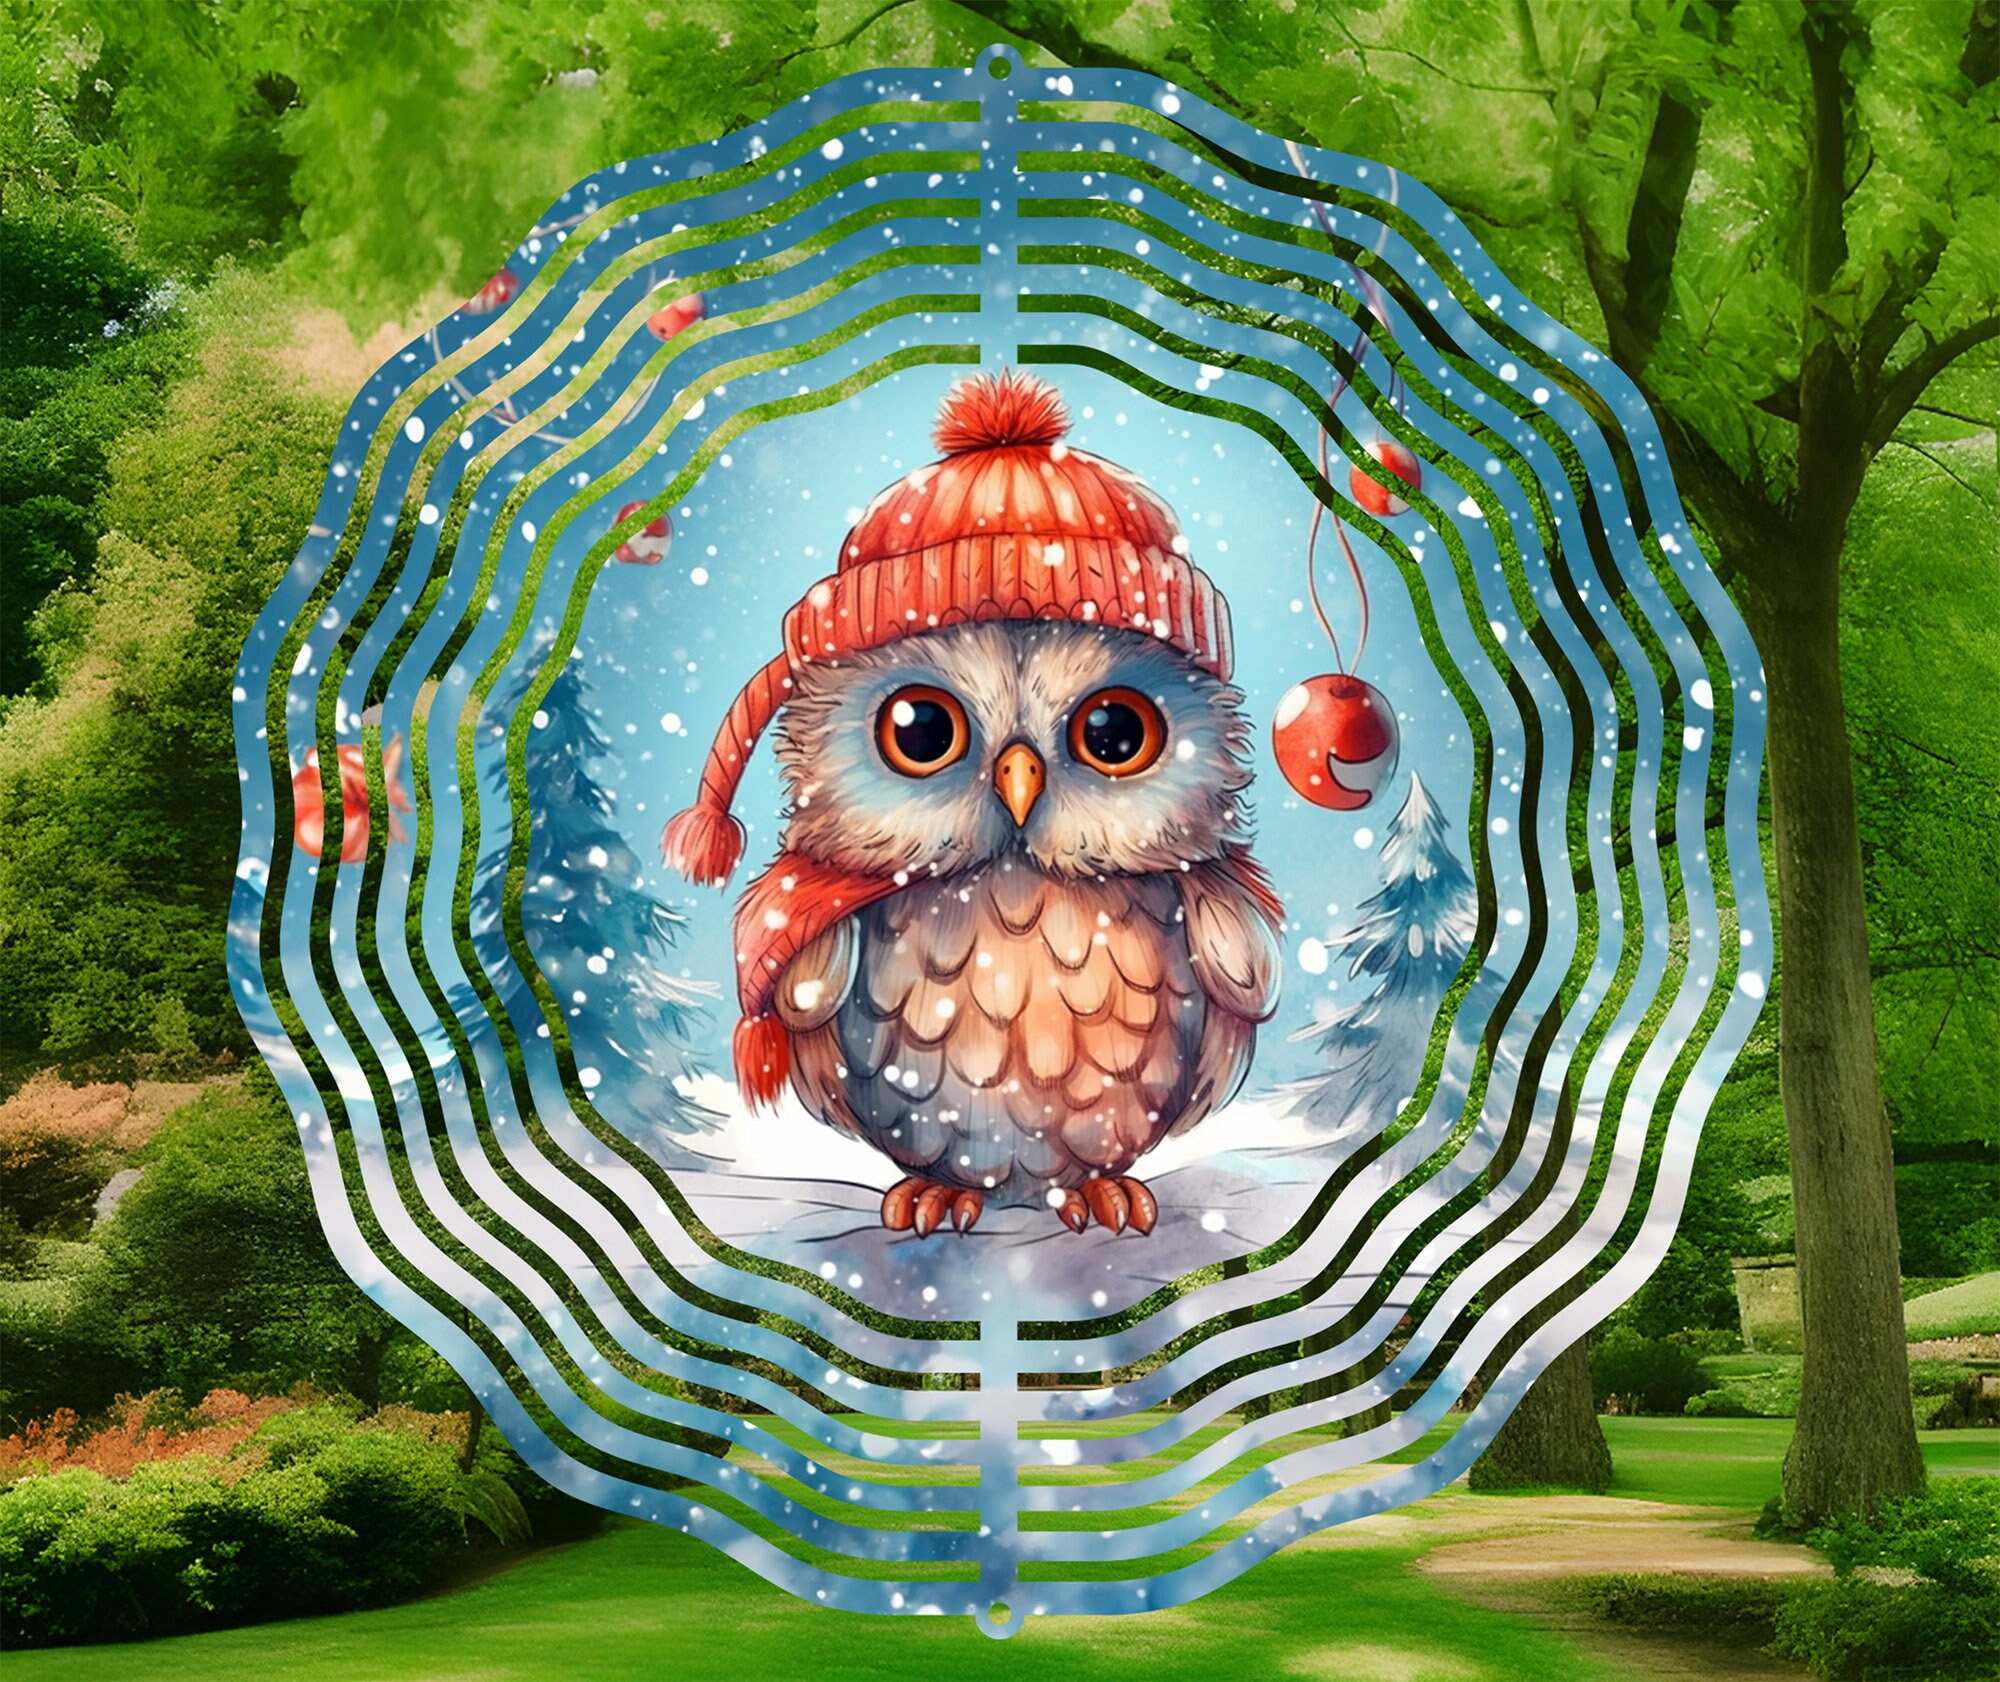 Owl Christmas Wind Spinner For Yard And Garden, Outdoor Garden Yard Decoration, Garden Decor, Chime Art Gift